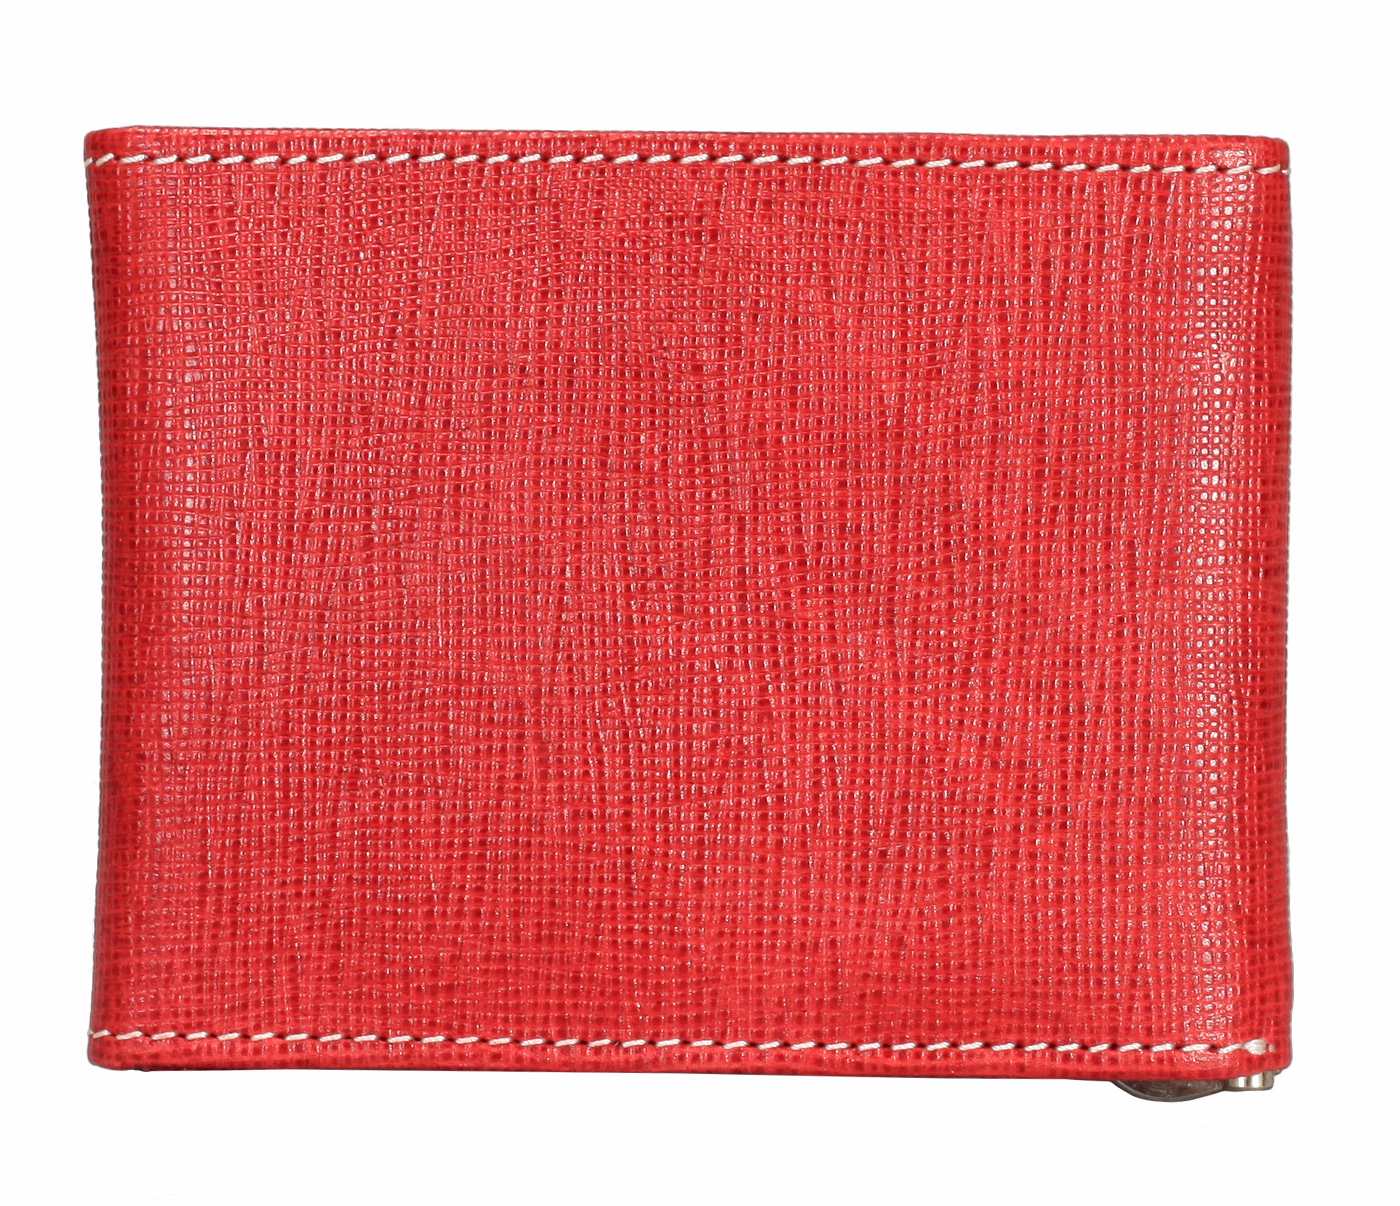 W328-Noah-Men's bifold money clip wallet in Genuine Leather - Red